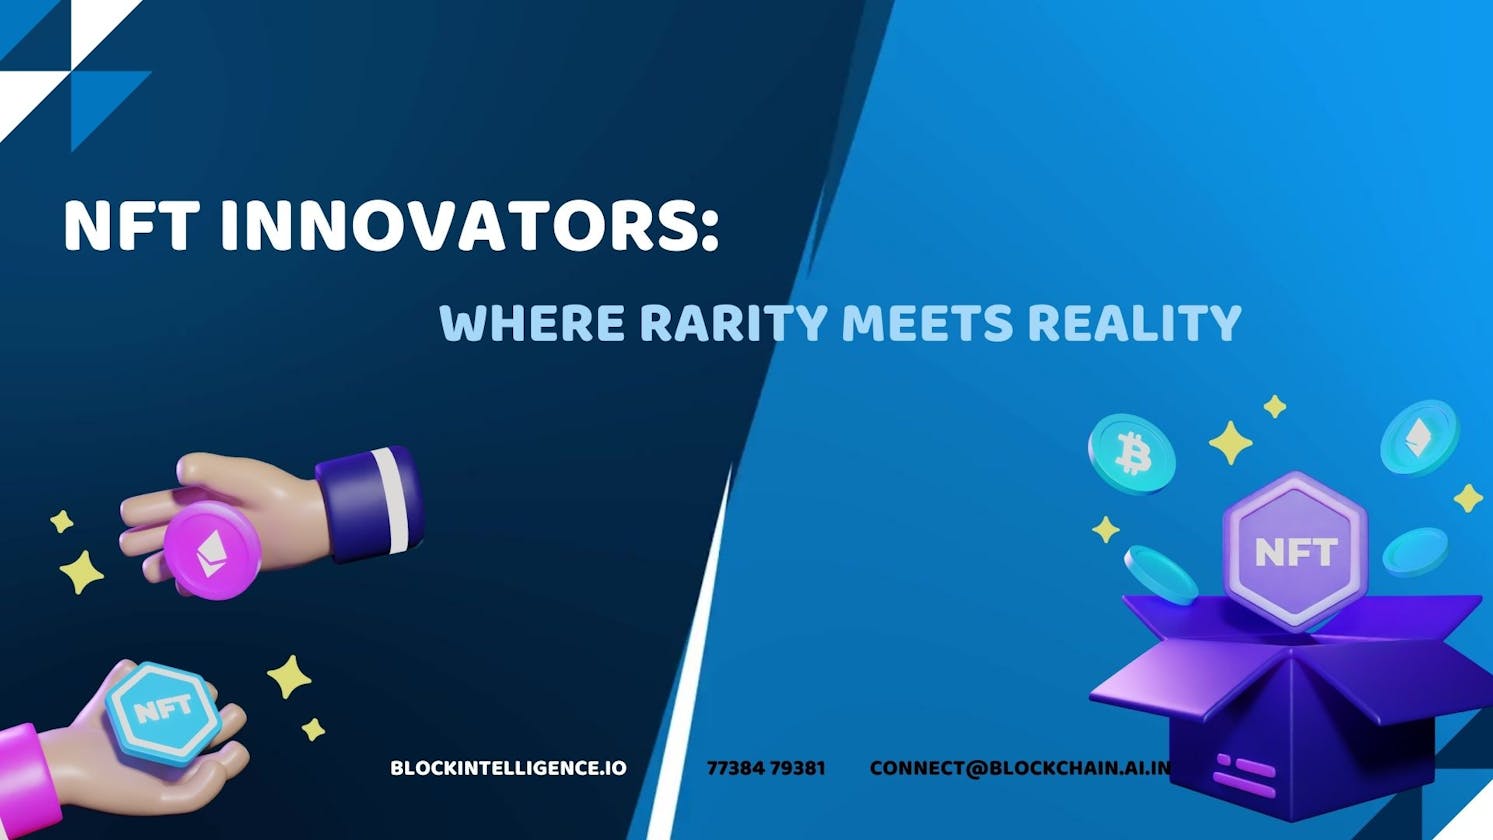 NFT Innovators: where rarity meets reality